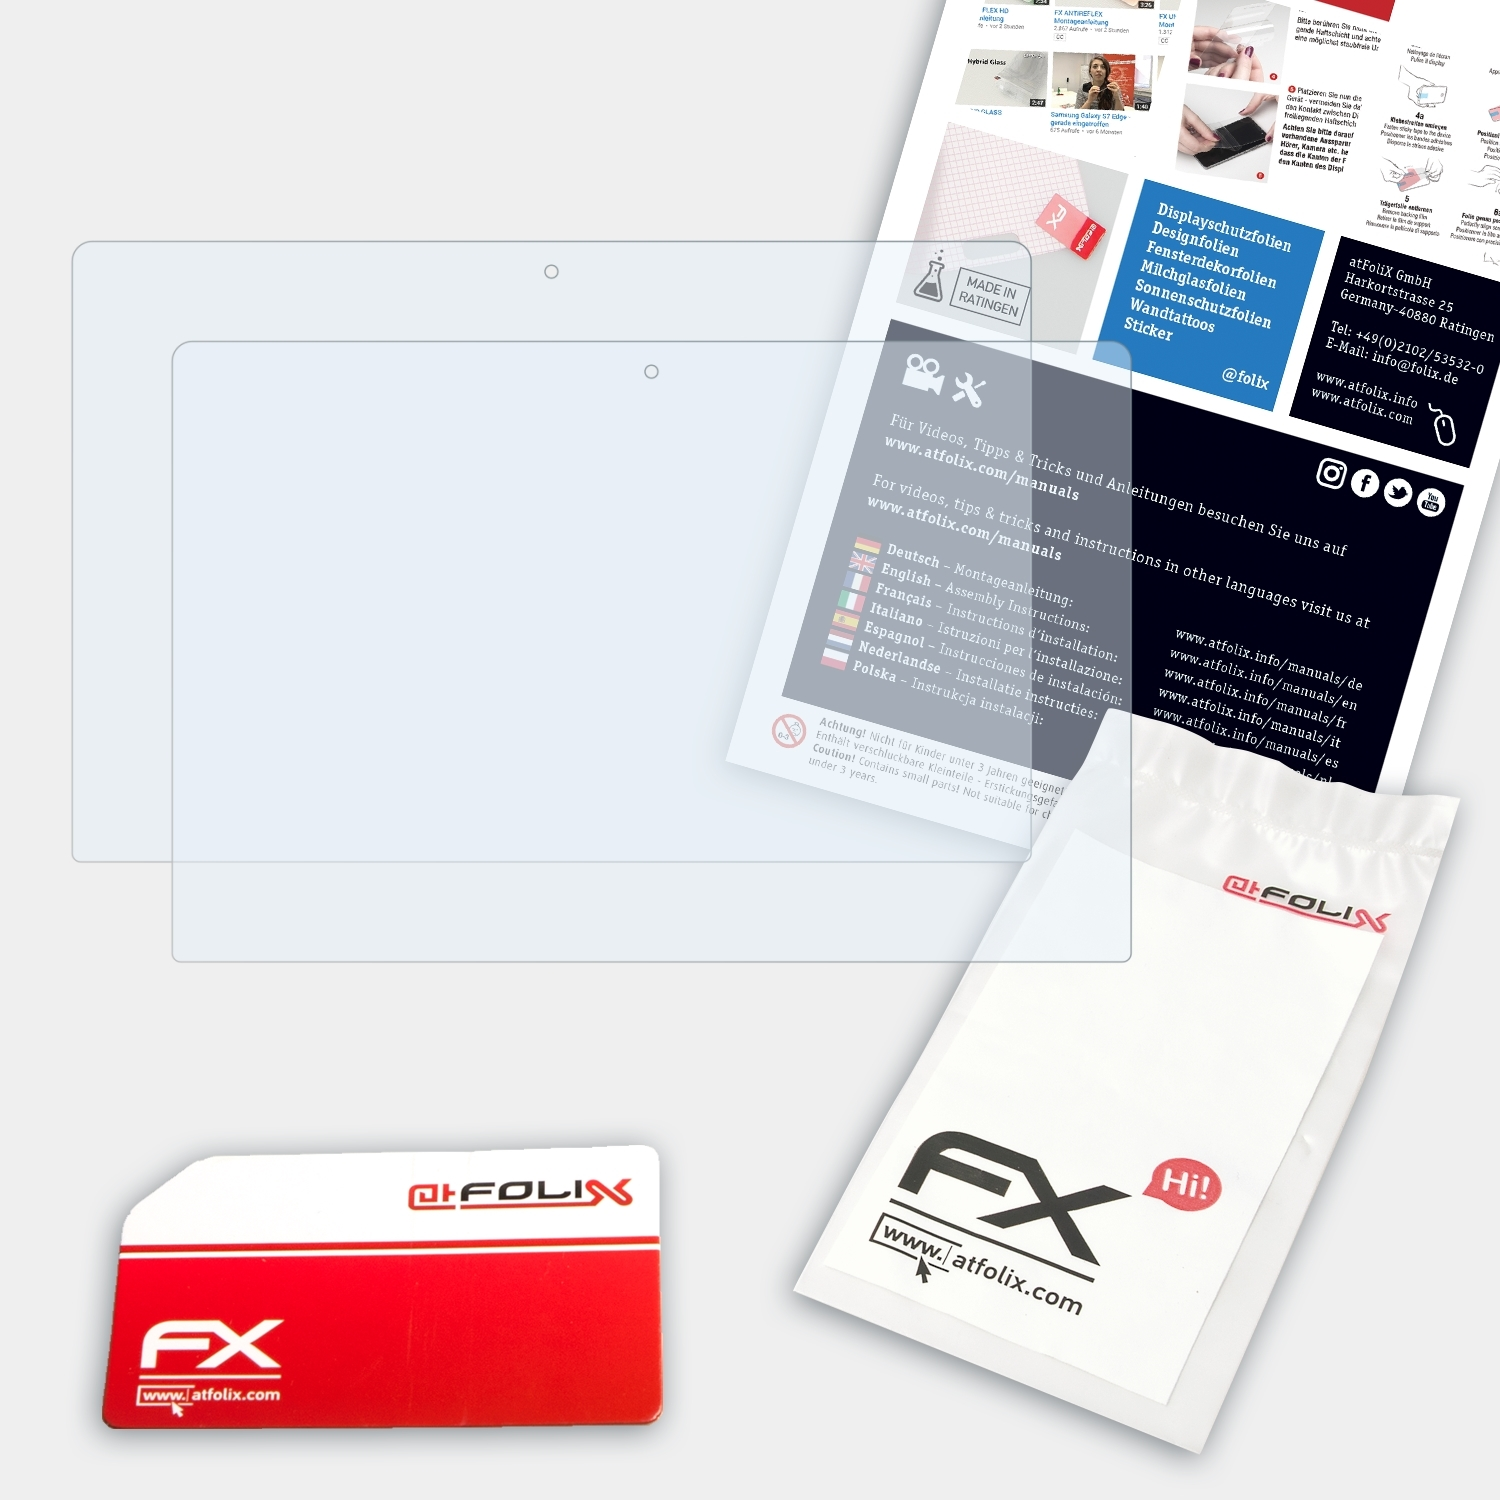 ATFOLIX 2x Displayschutz(für Asus S400CA) FX-Clear VivoBook